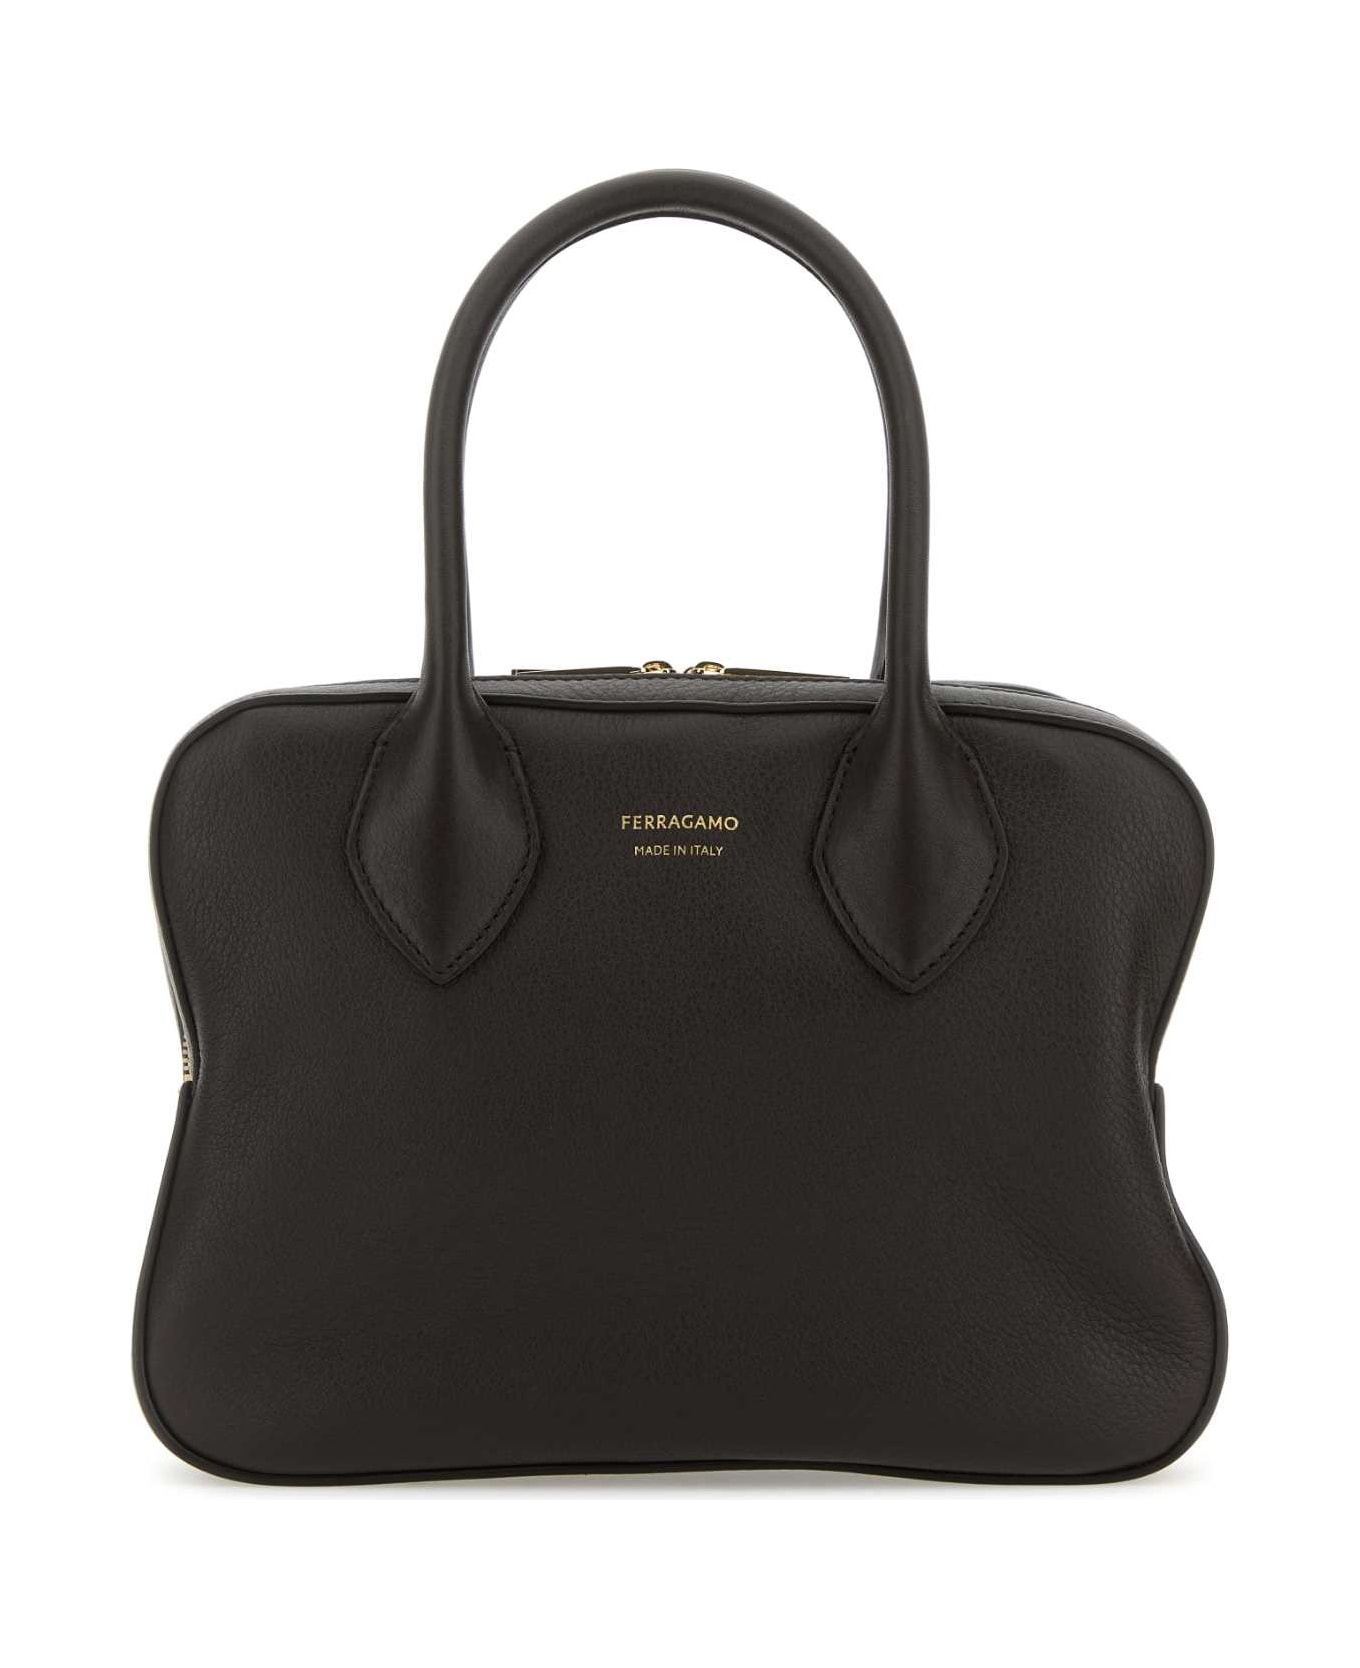 Ferragamo Dark Brown Leather Handbag - TESTADIMORO